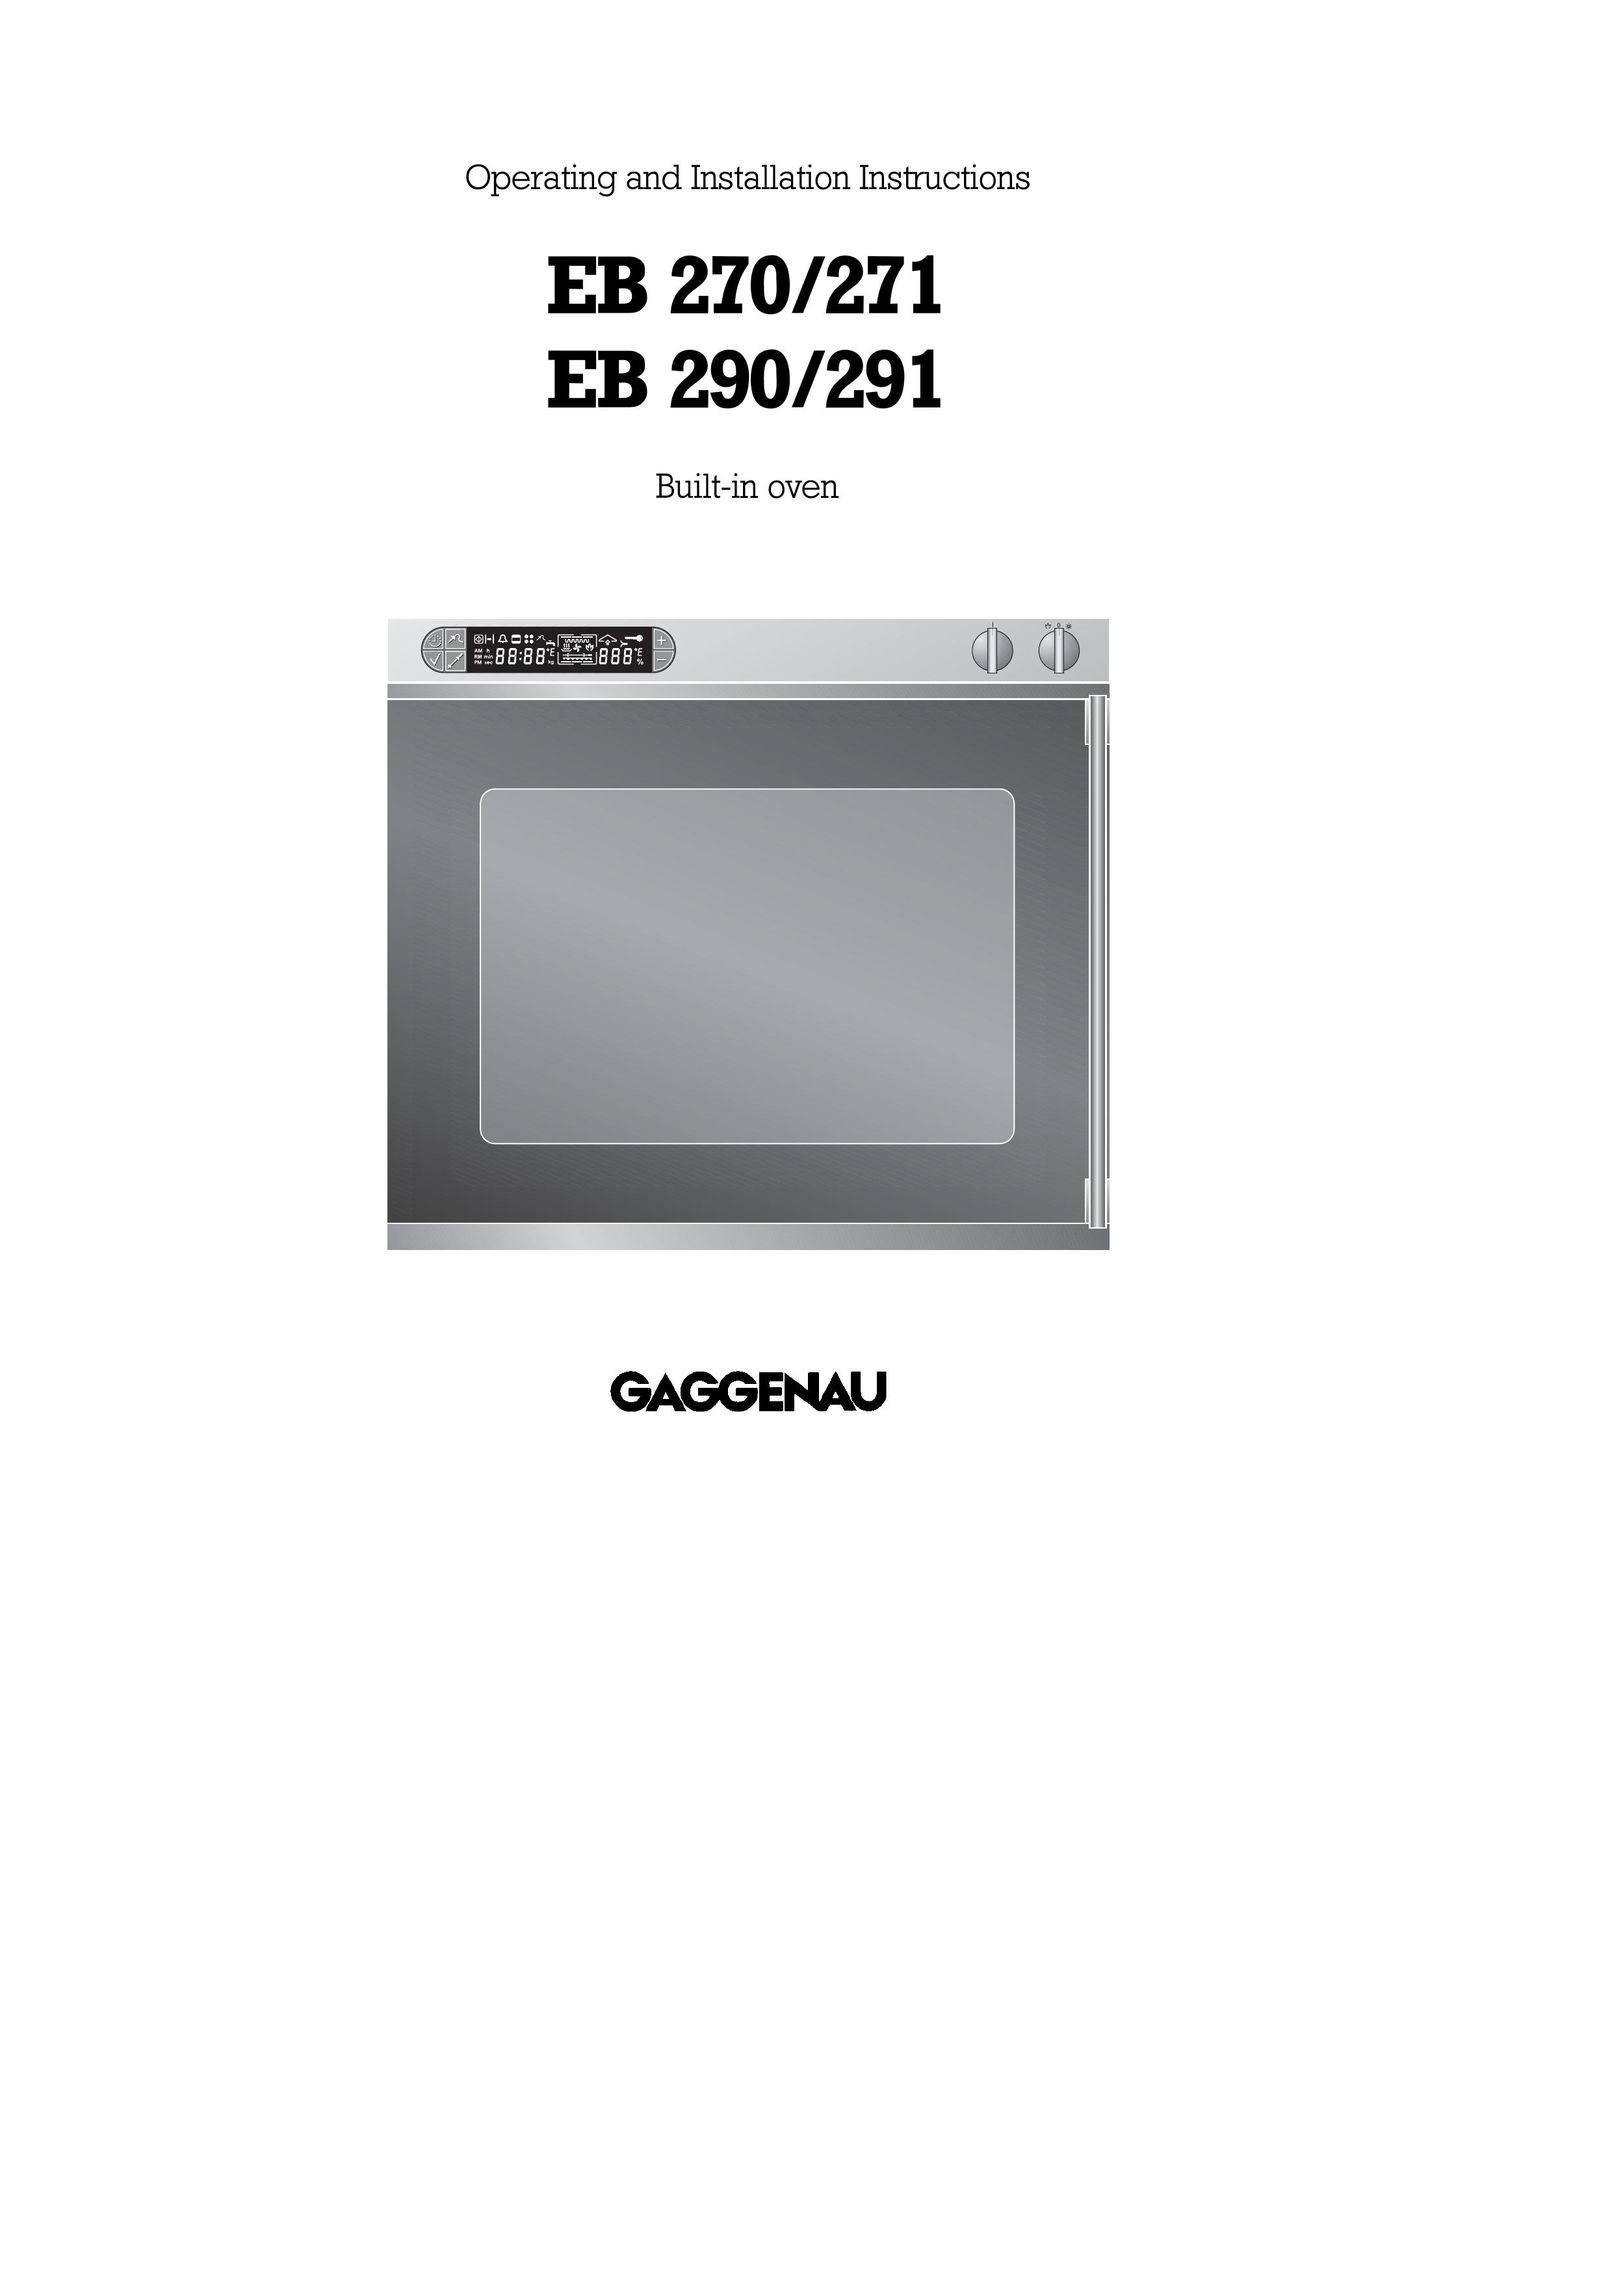 Gaggenau EB 270/271 Microwave Oven User Manual